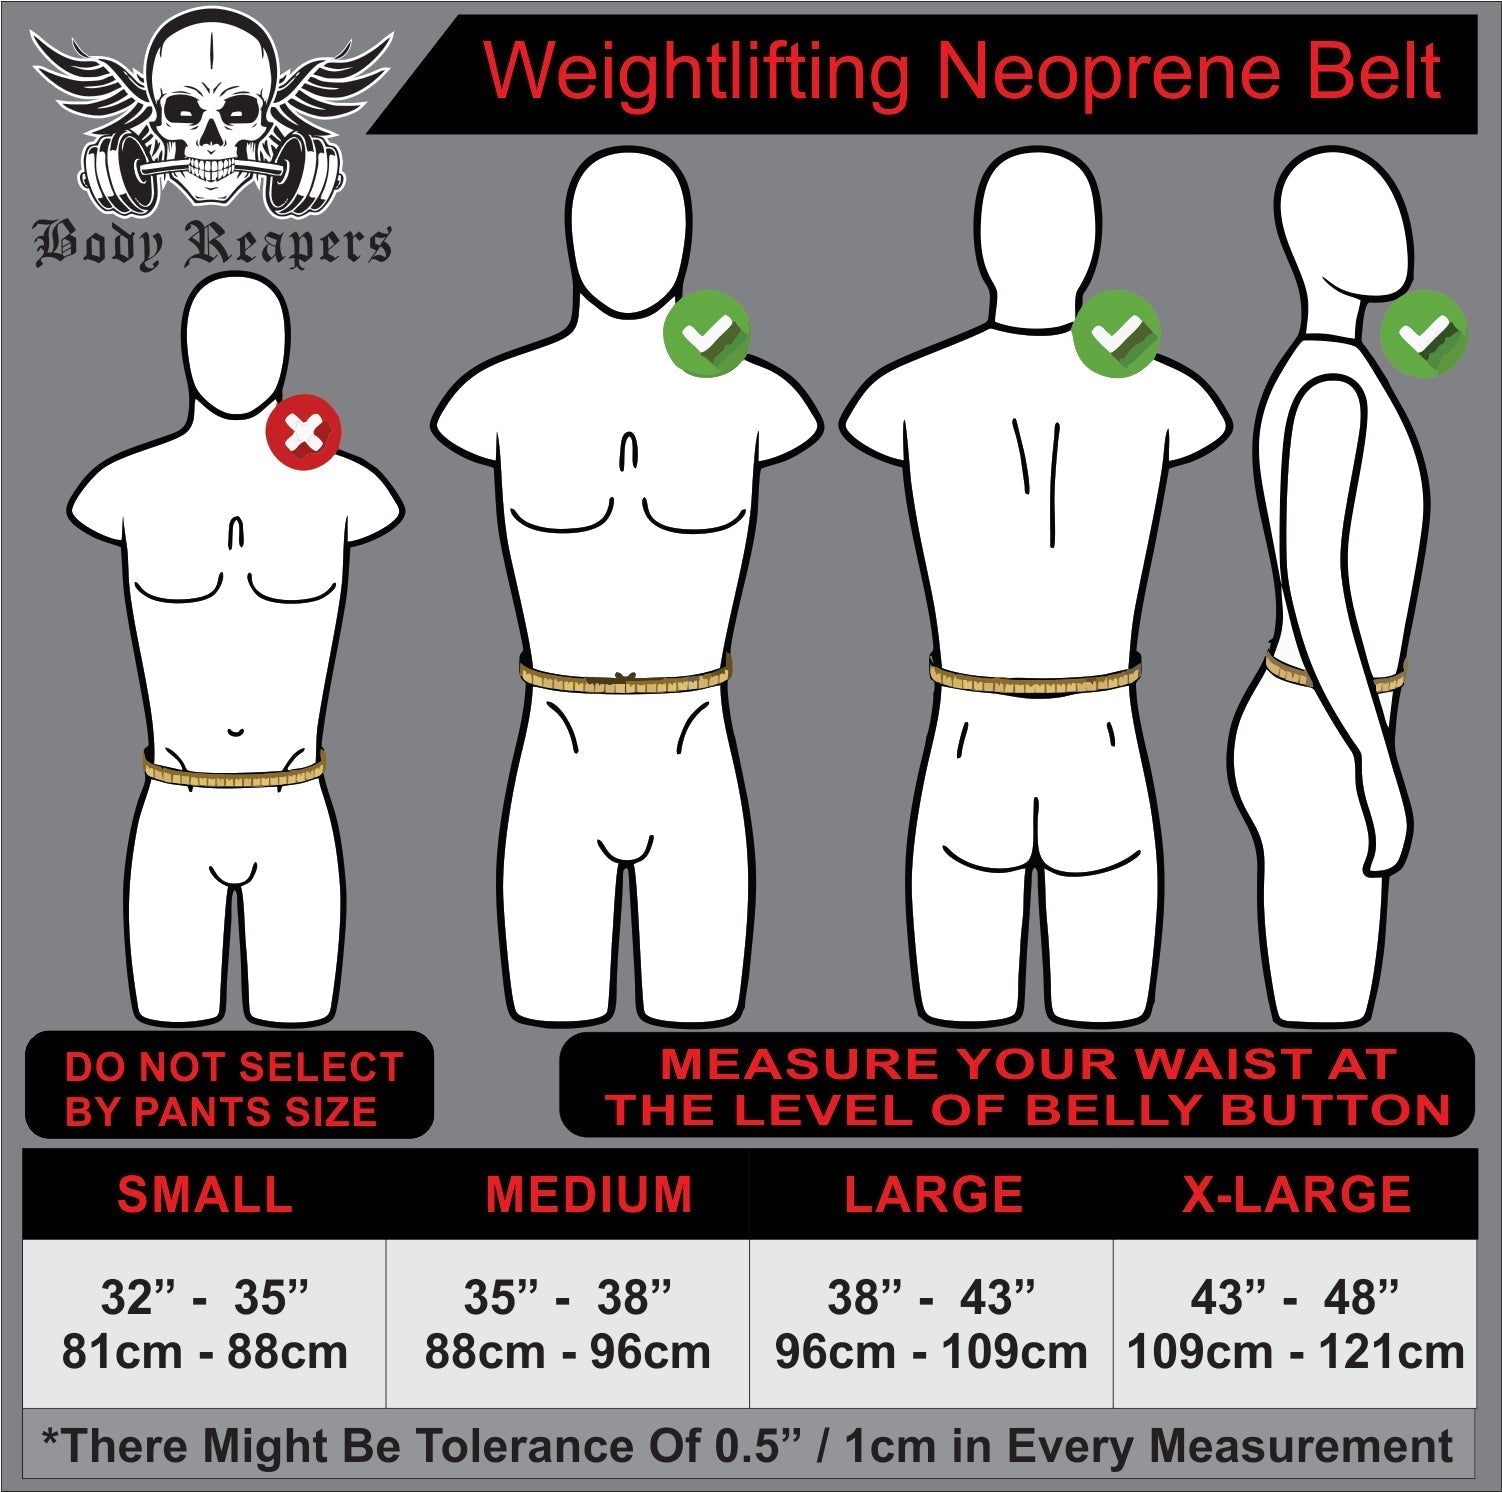 Body Reapers Neoprene 6" Weightlifting Belt Pink Harmony